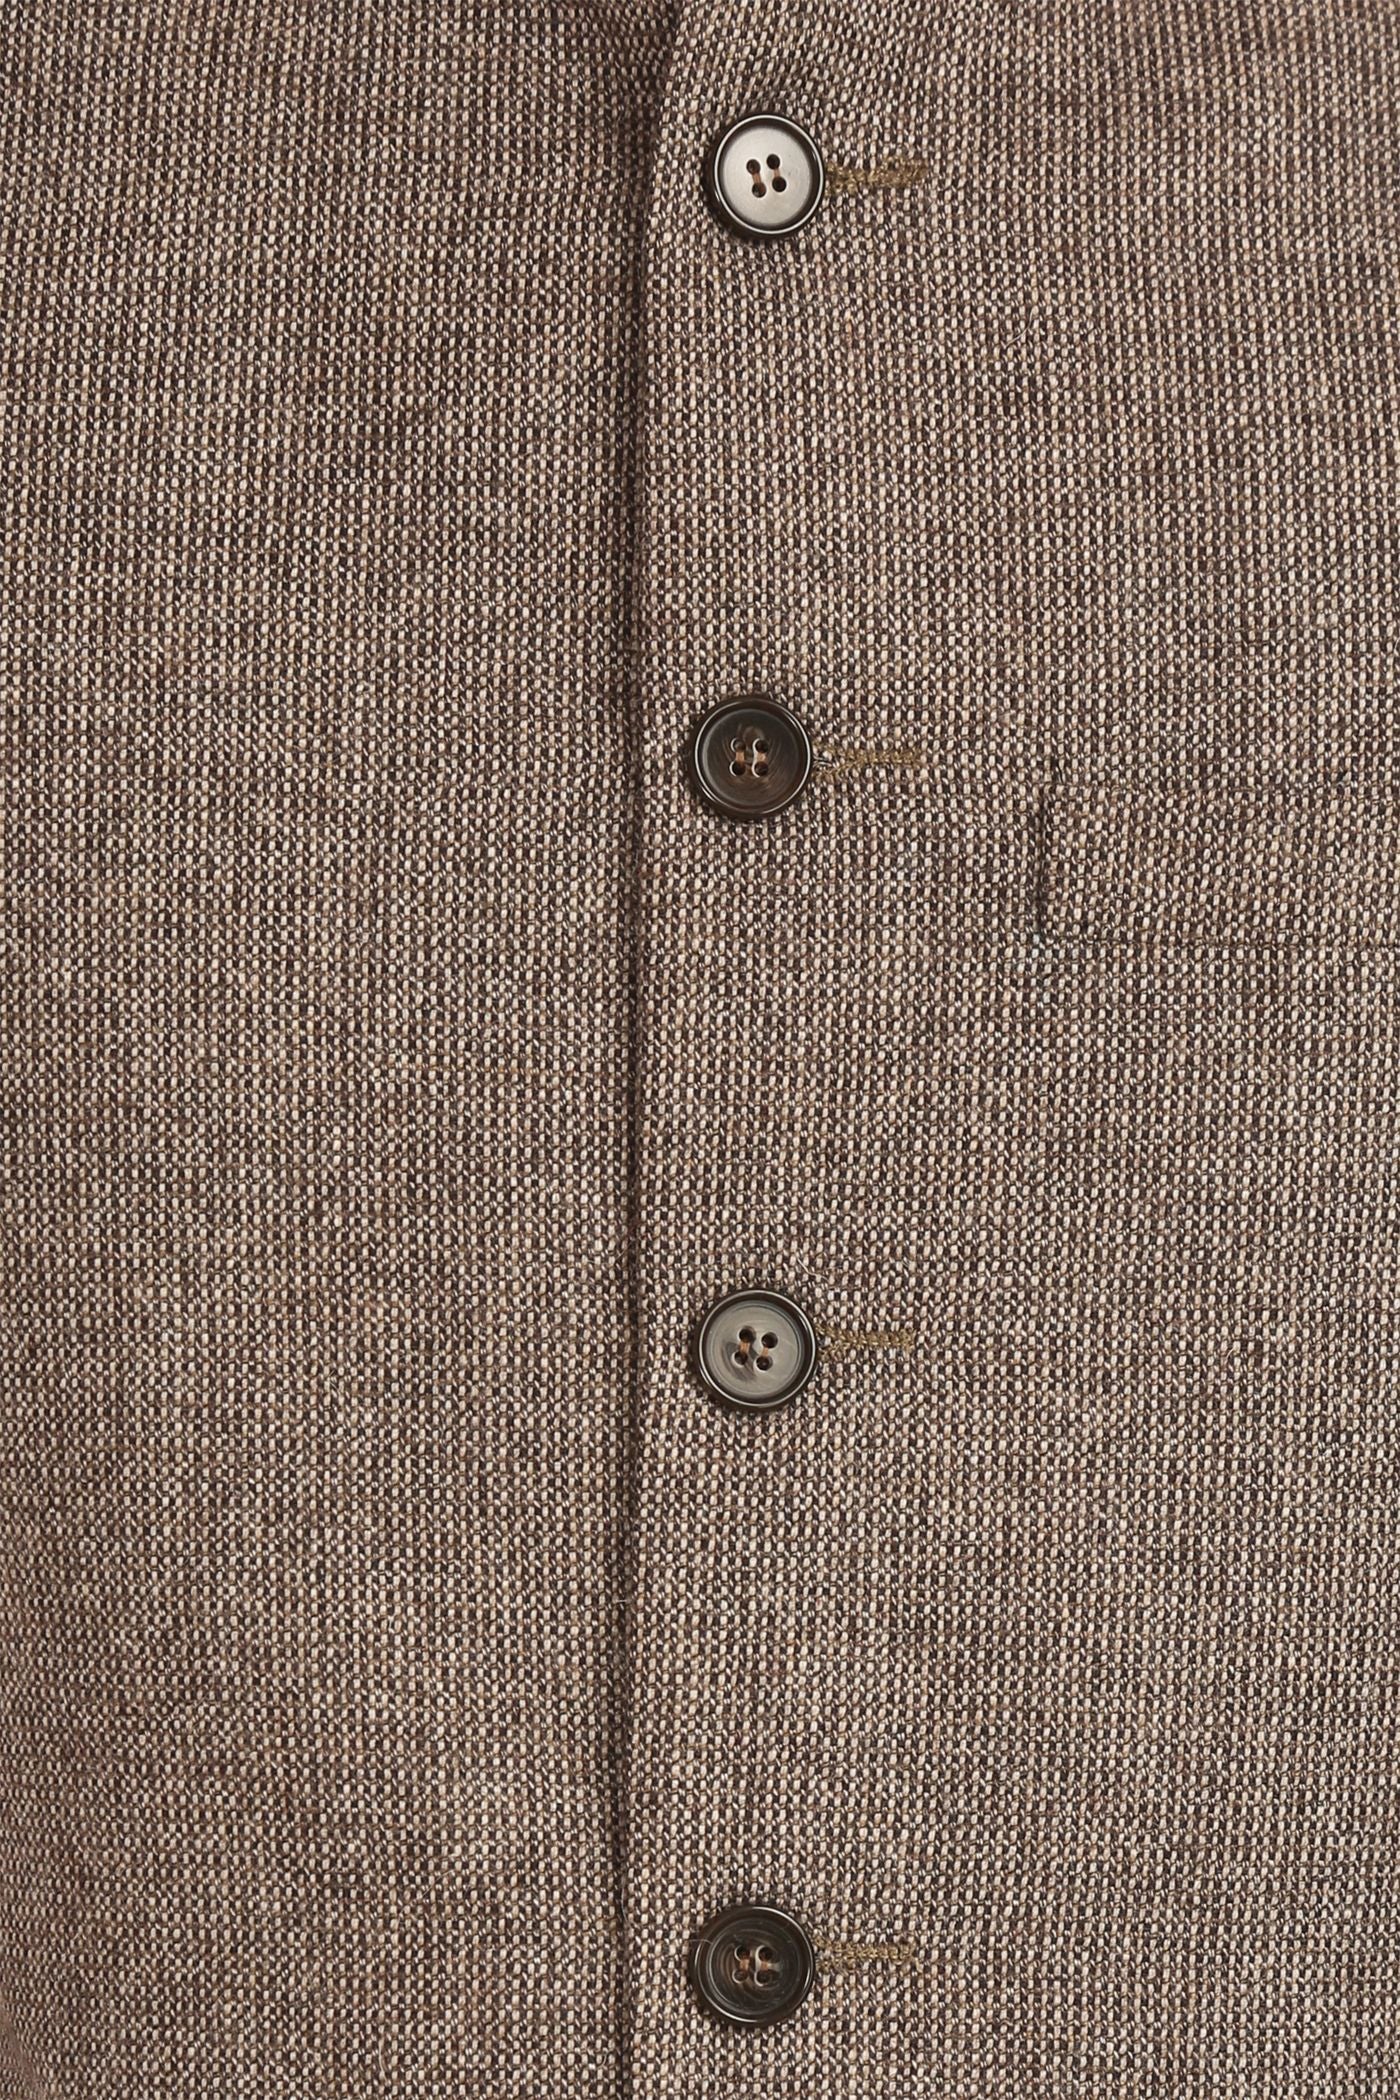 Tweed Grey Modi Nehru Jacket